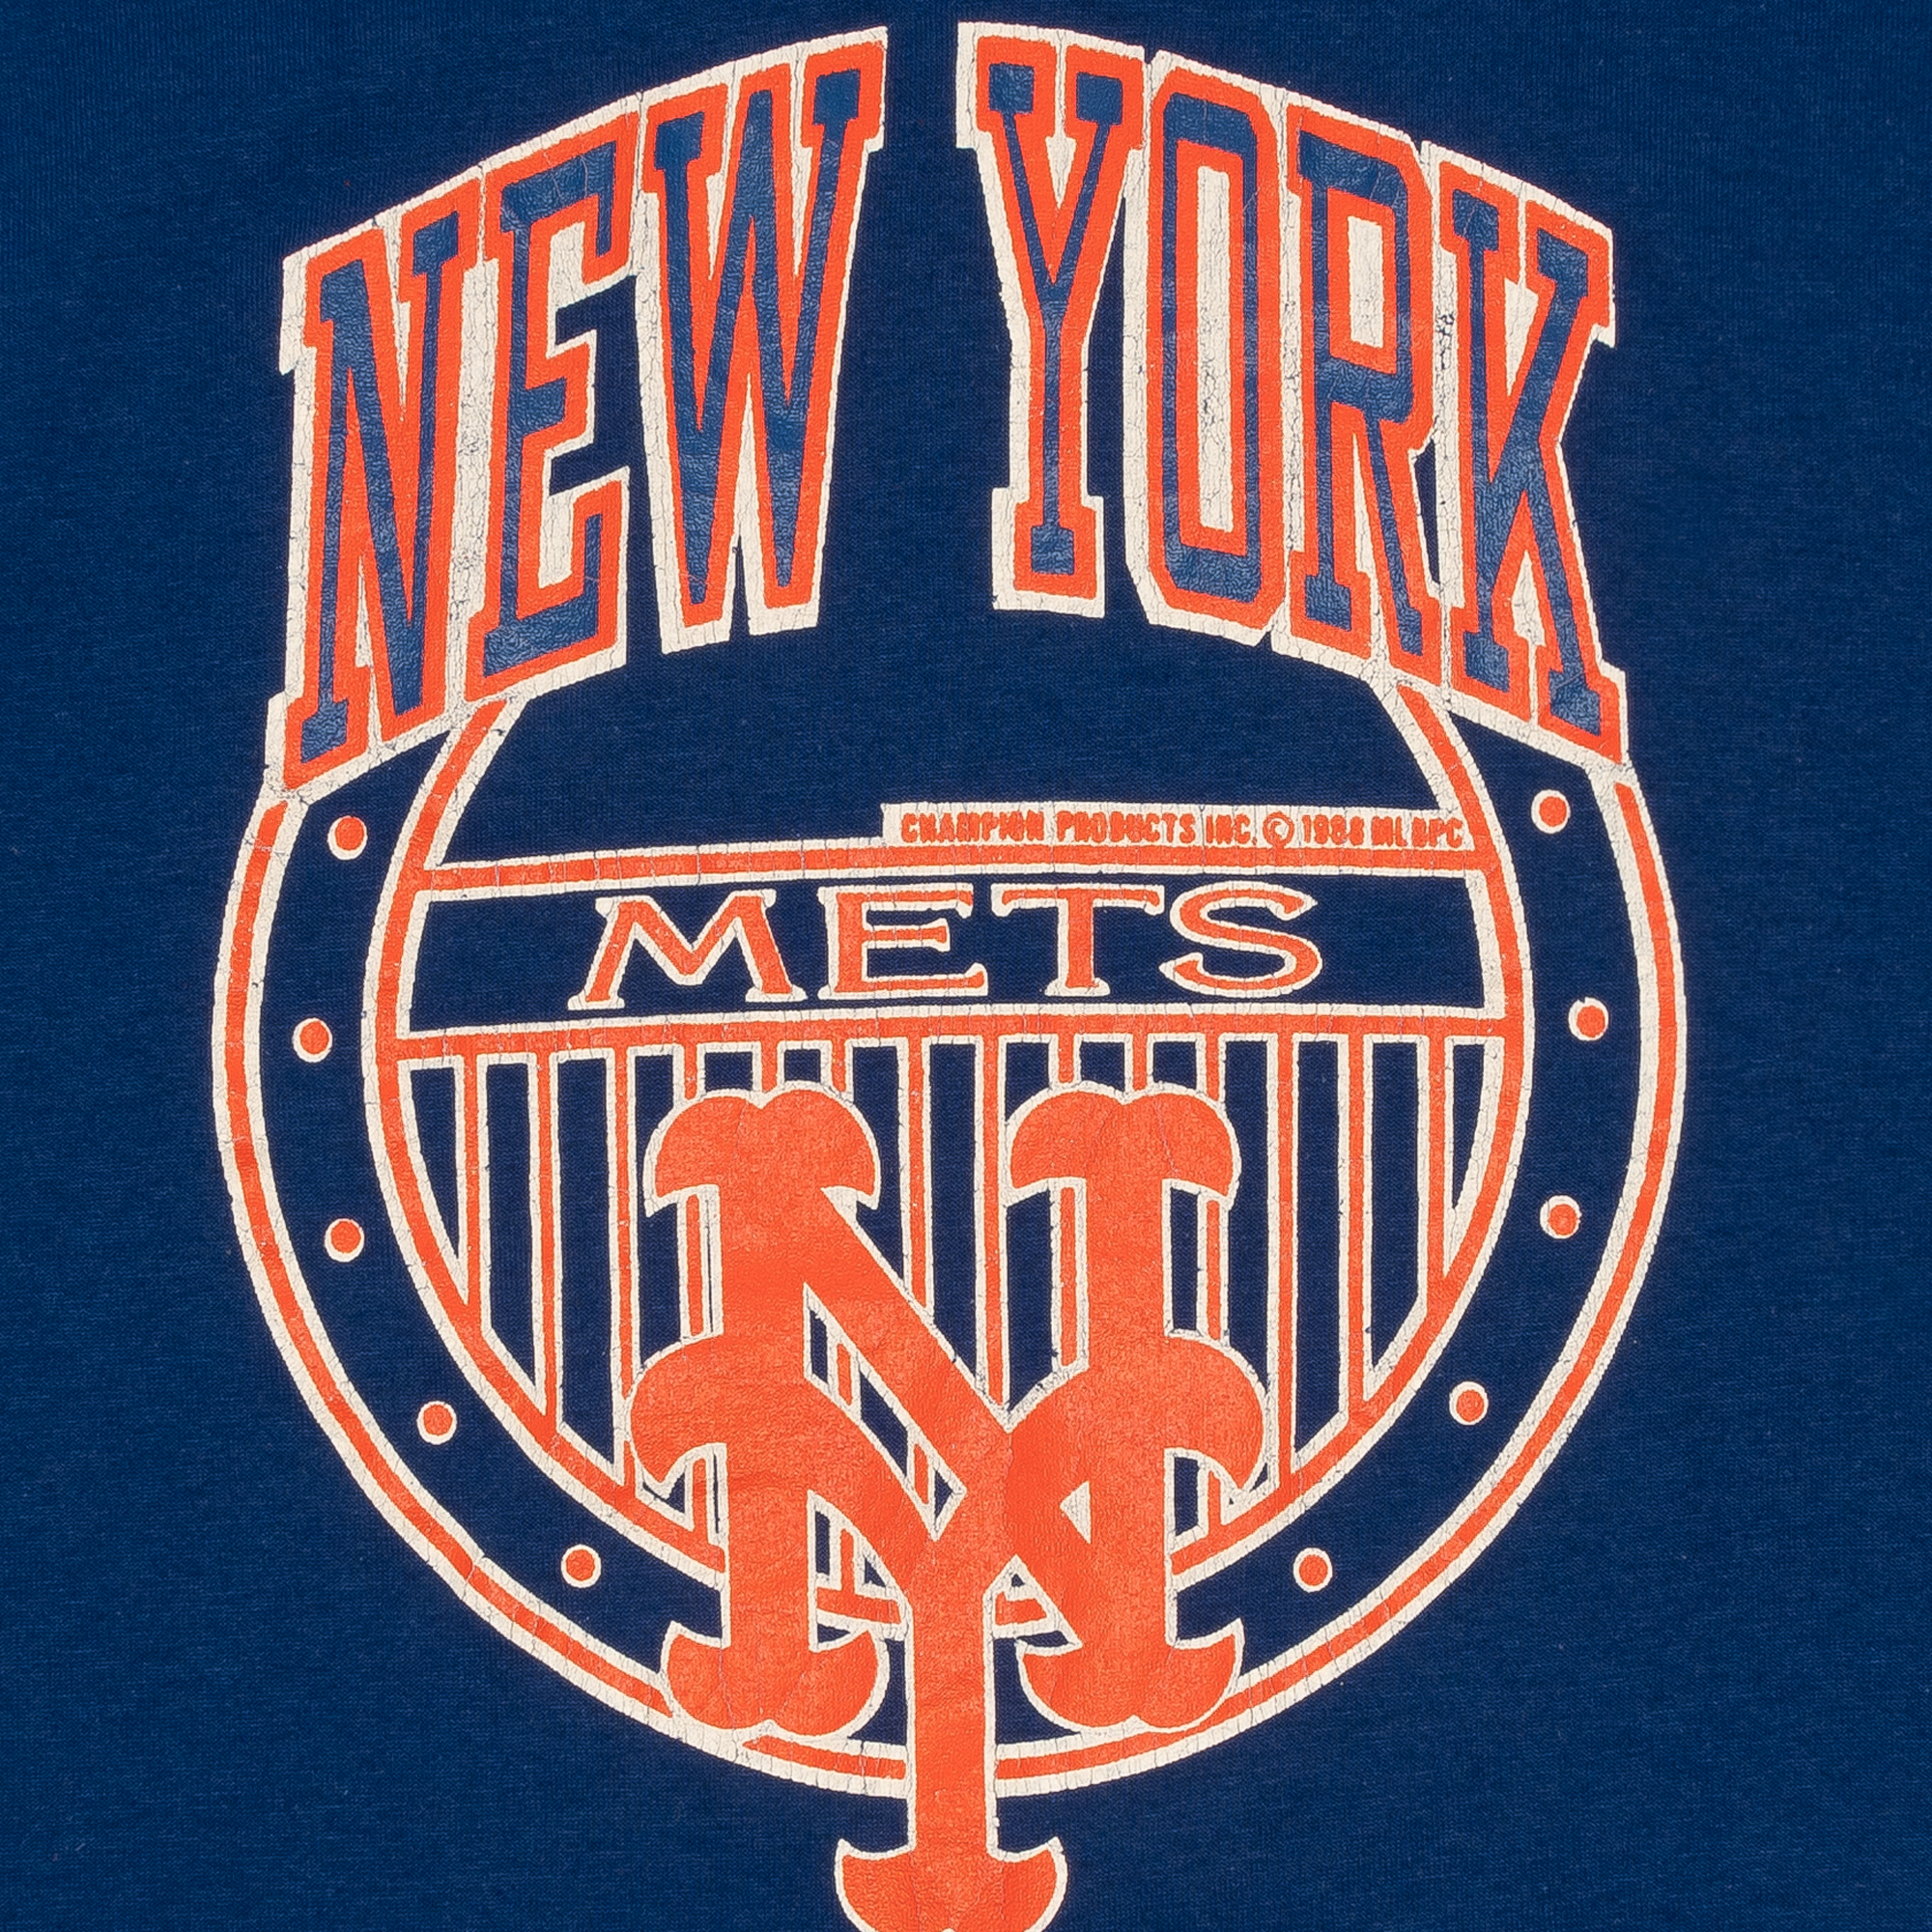 New York Mets Retro Logo Champion 1988 MLB Tee Blue-PLUS